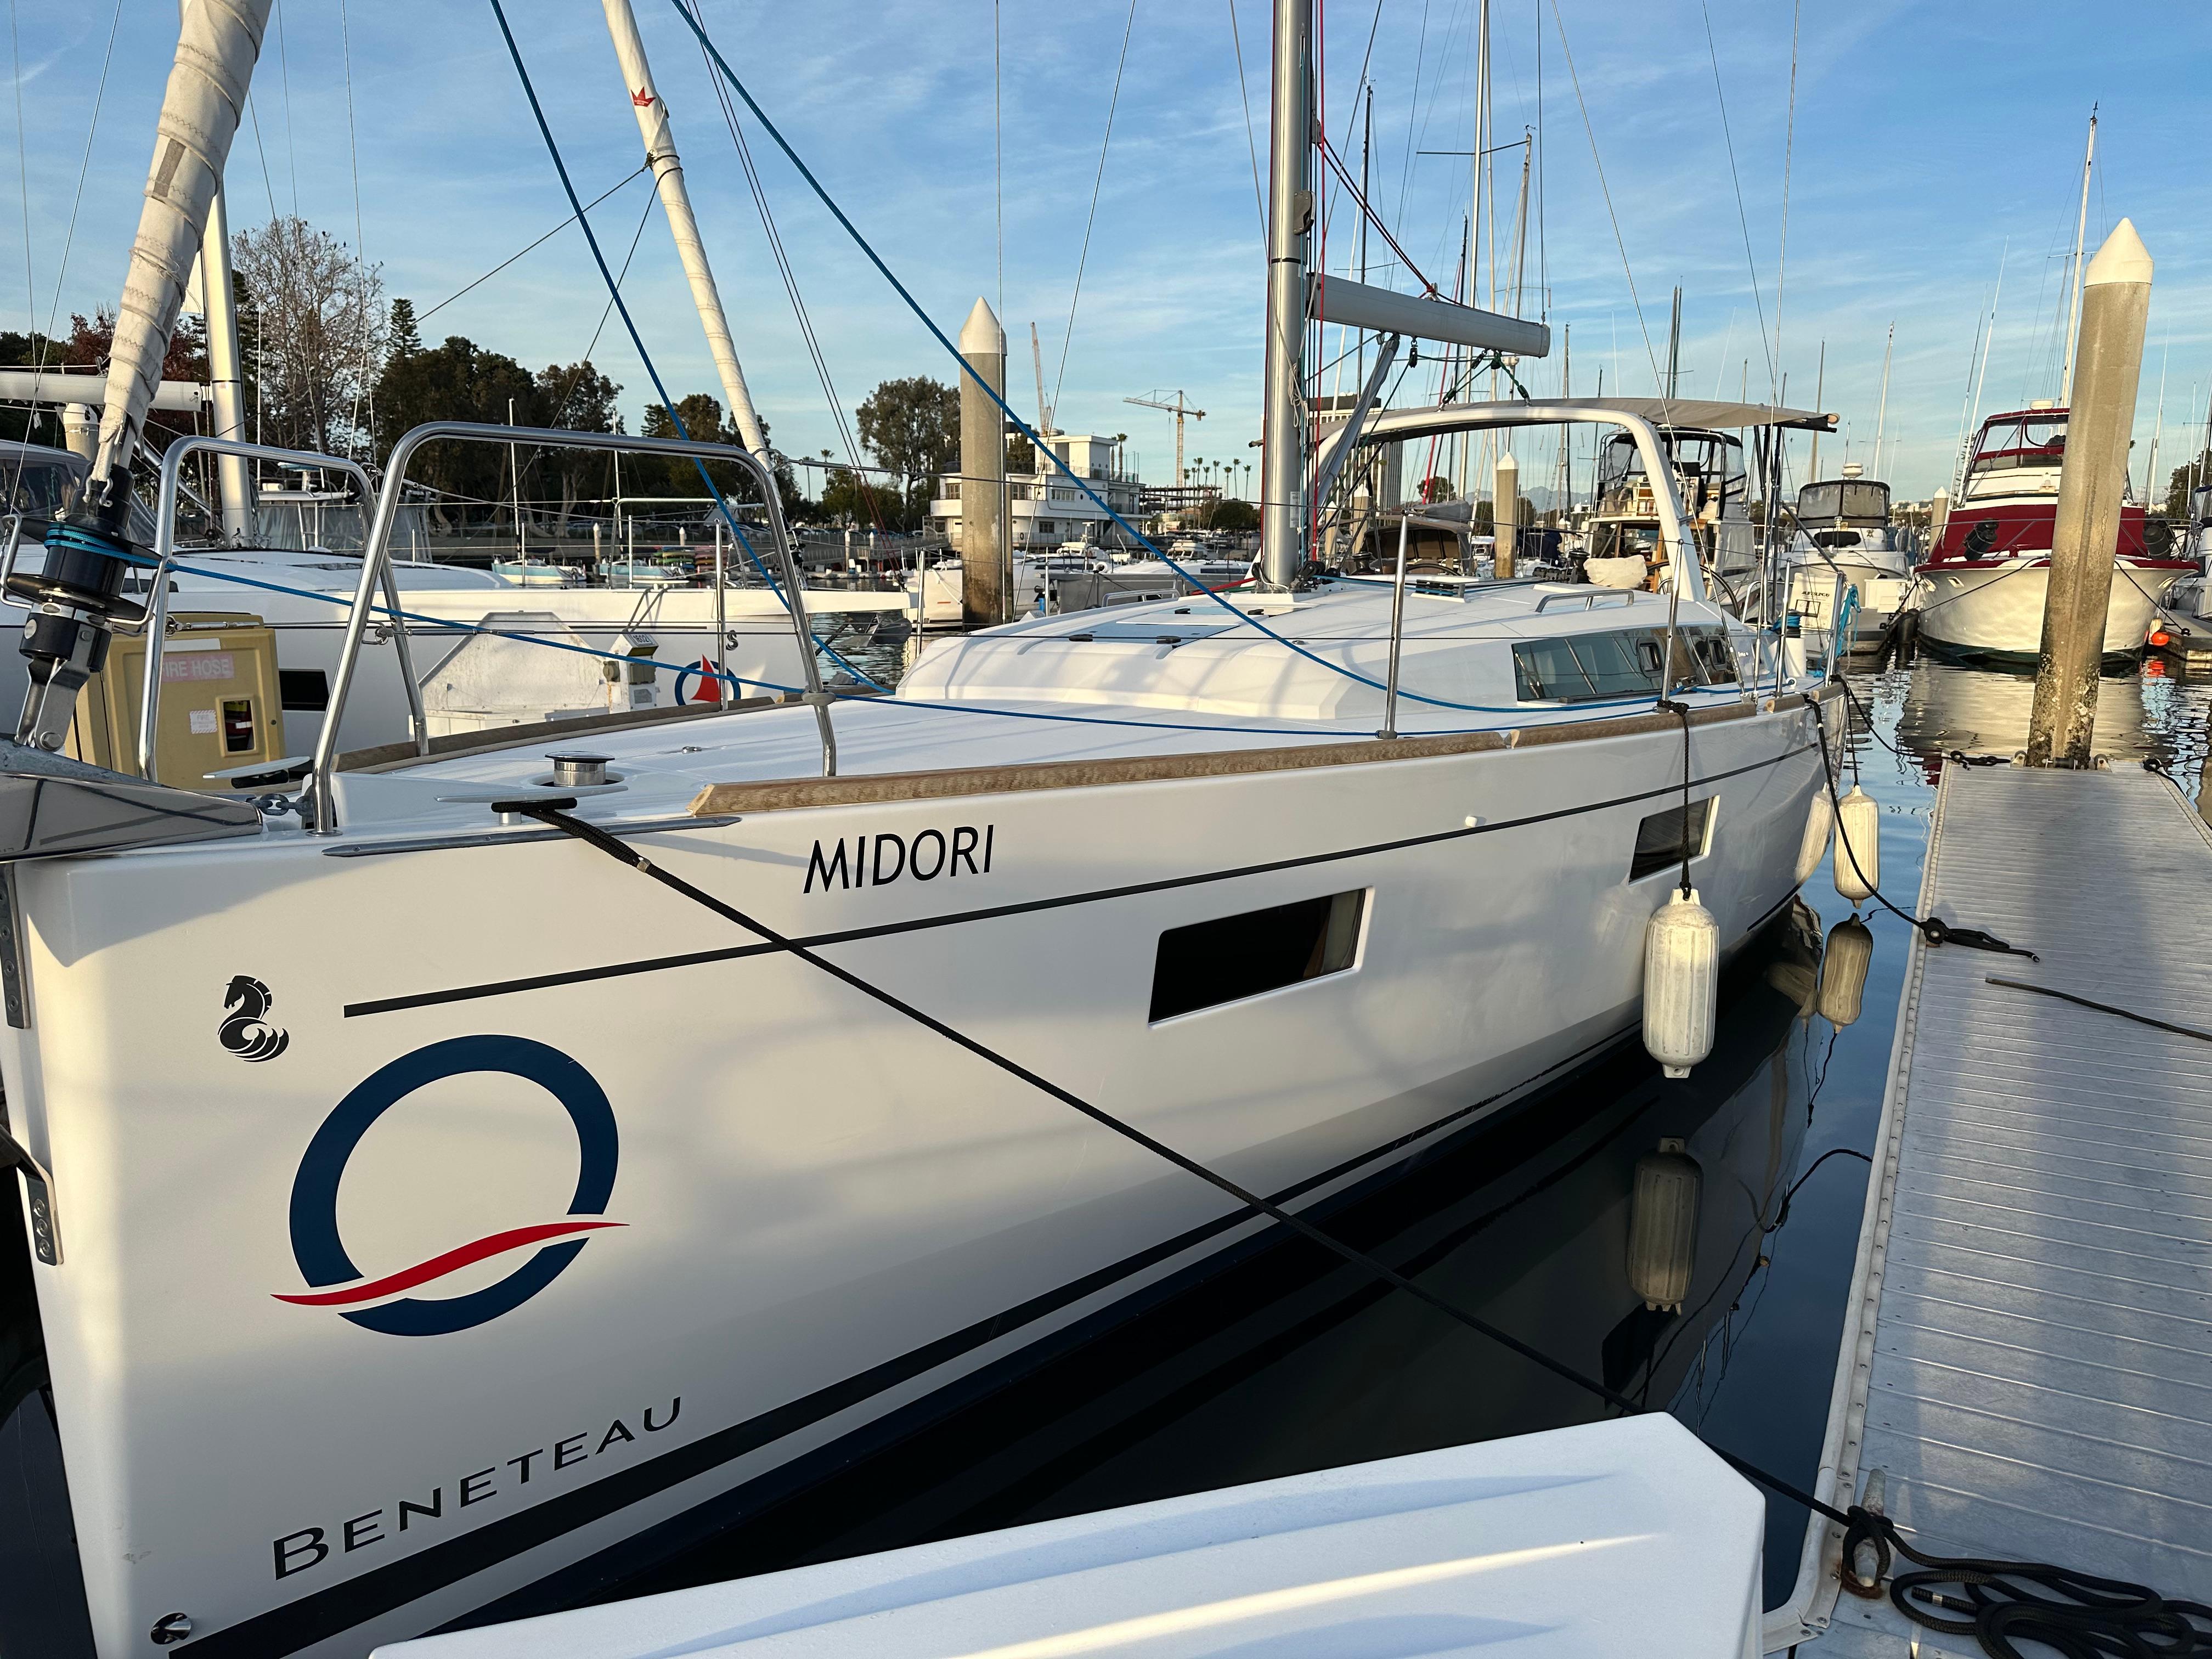 37.92′ Beneteau 2019 Yacht for Sale